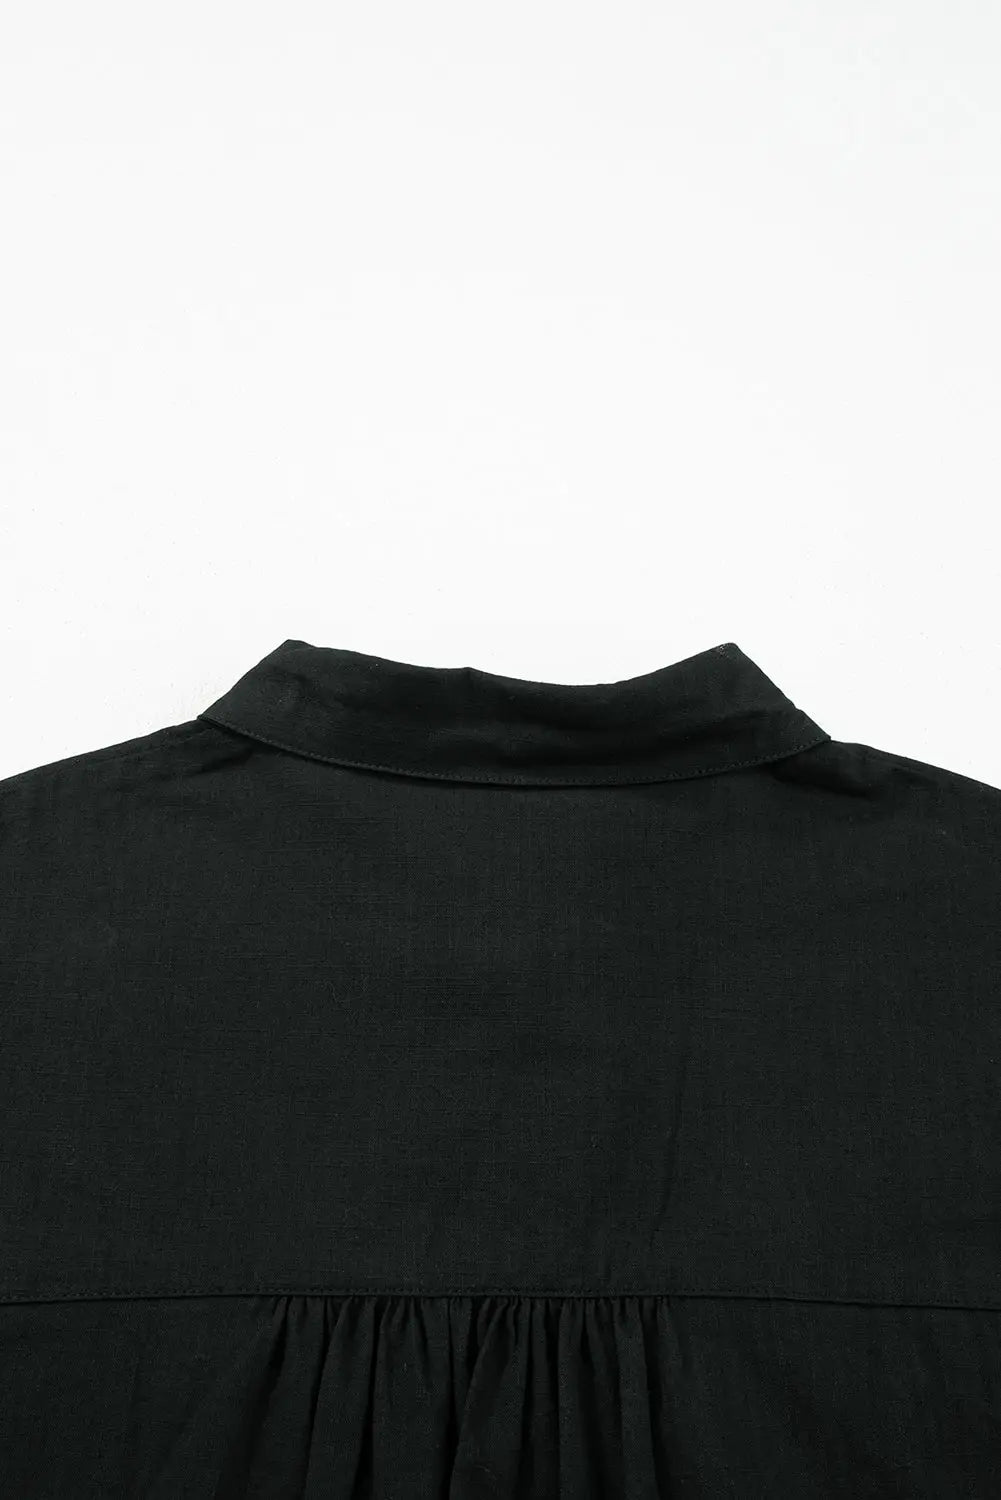 Black lightweight shirt style beach cover up - swimwear